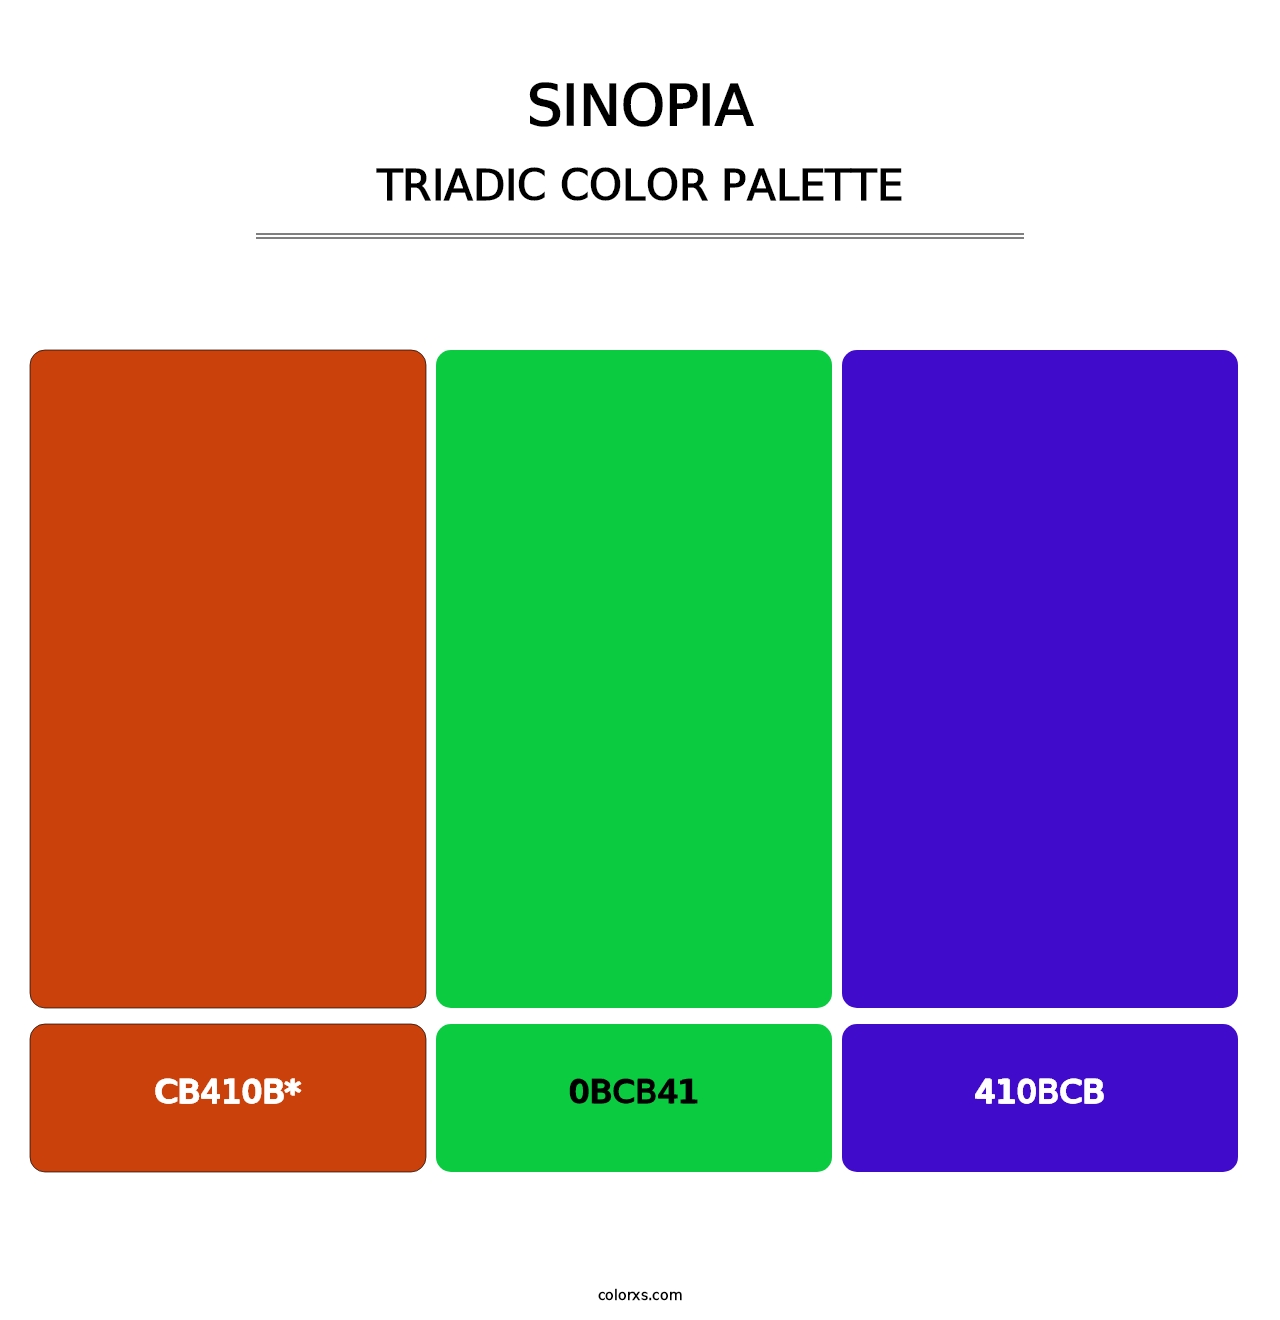 Sinopia - Triadic Color Palette